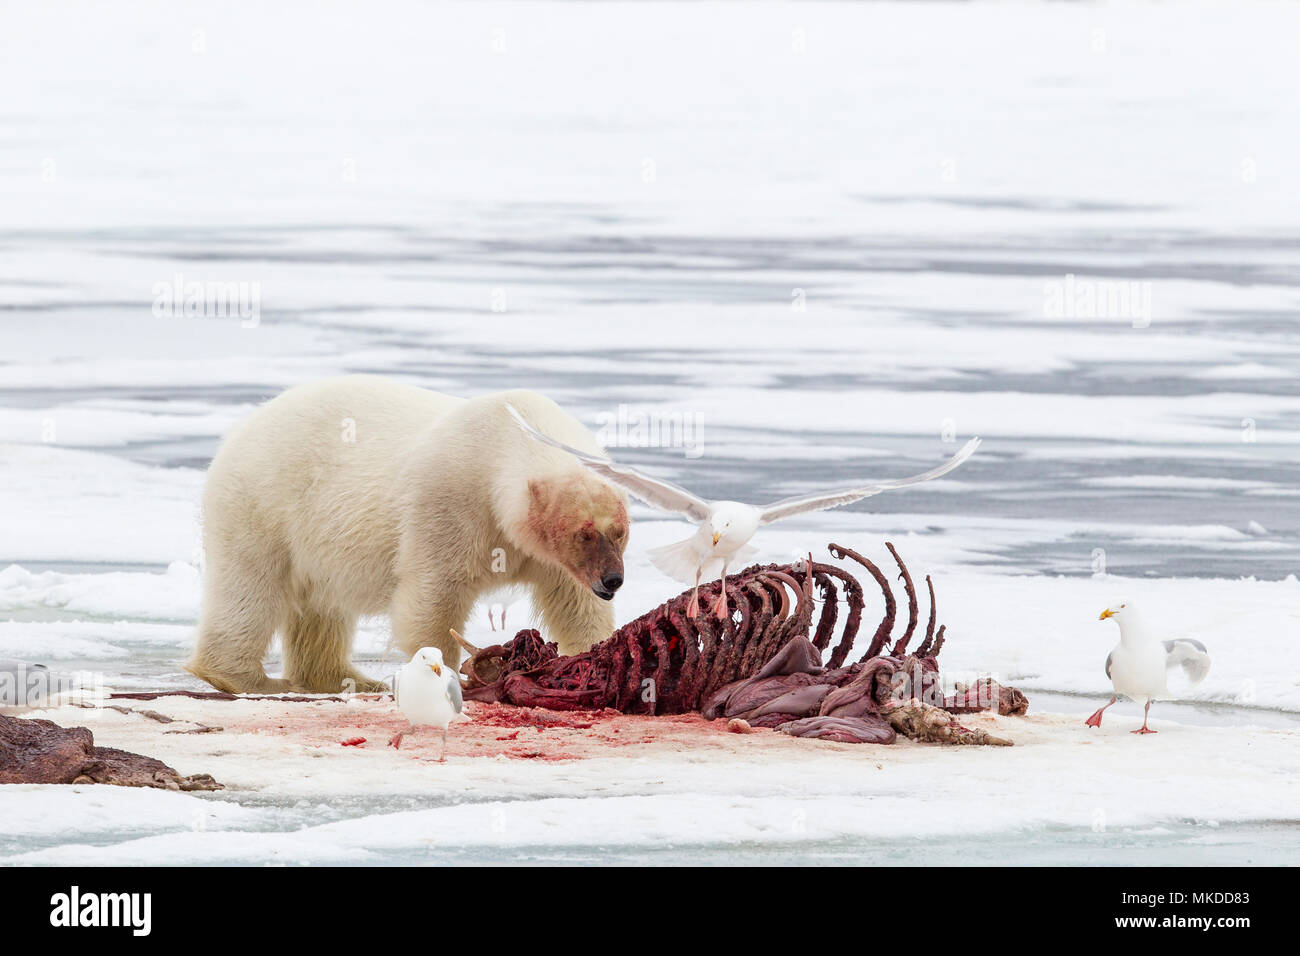 Polar bear (Ursus maritimus) eating a walrus (Odobenus rosmarus), on the ice, Spitsbergen, Svalbard, Norwegian archipelago, Norway, Arctic Ocean Stock Photo